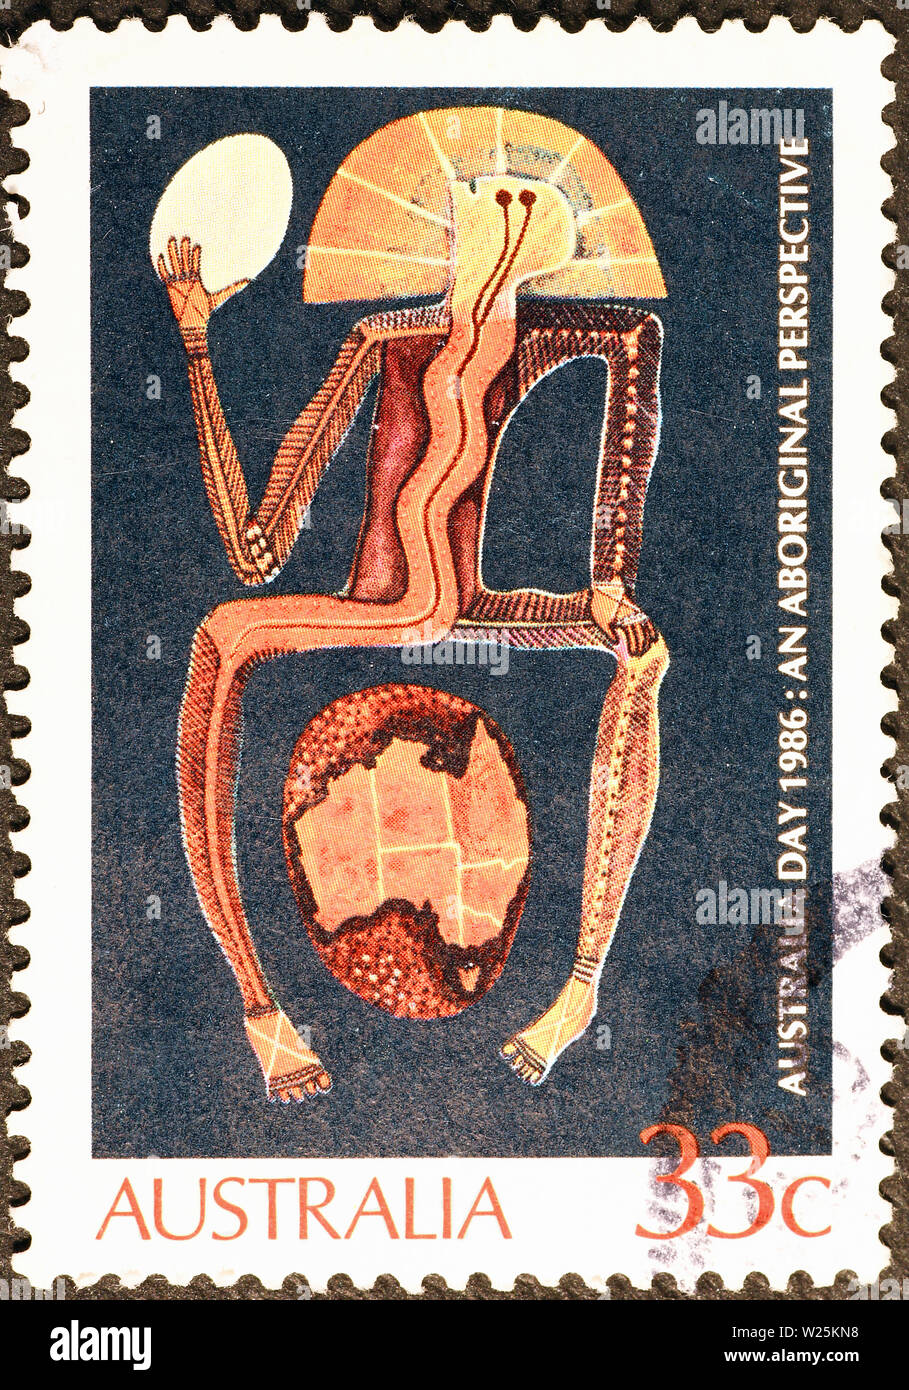 Aboriginal art on postage stamp of Australia Stock Photo